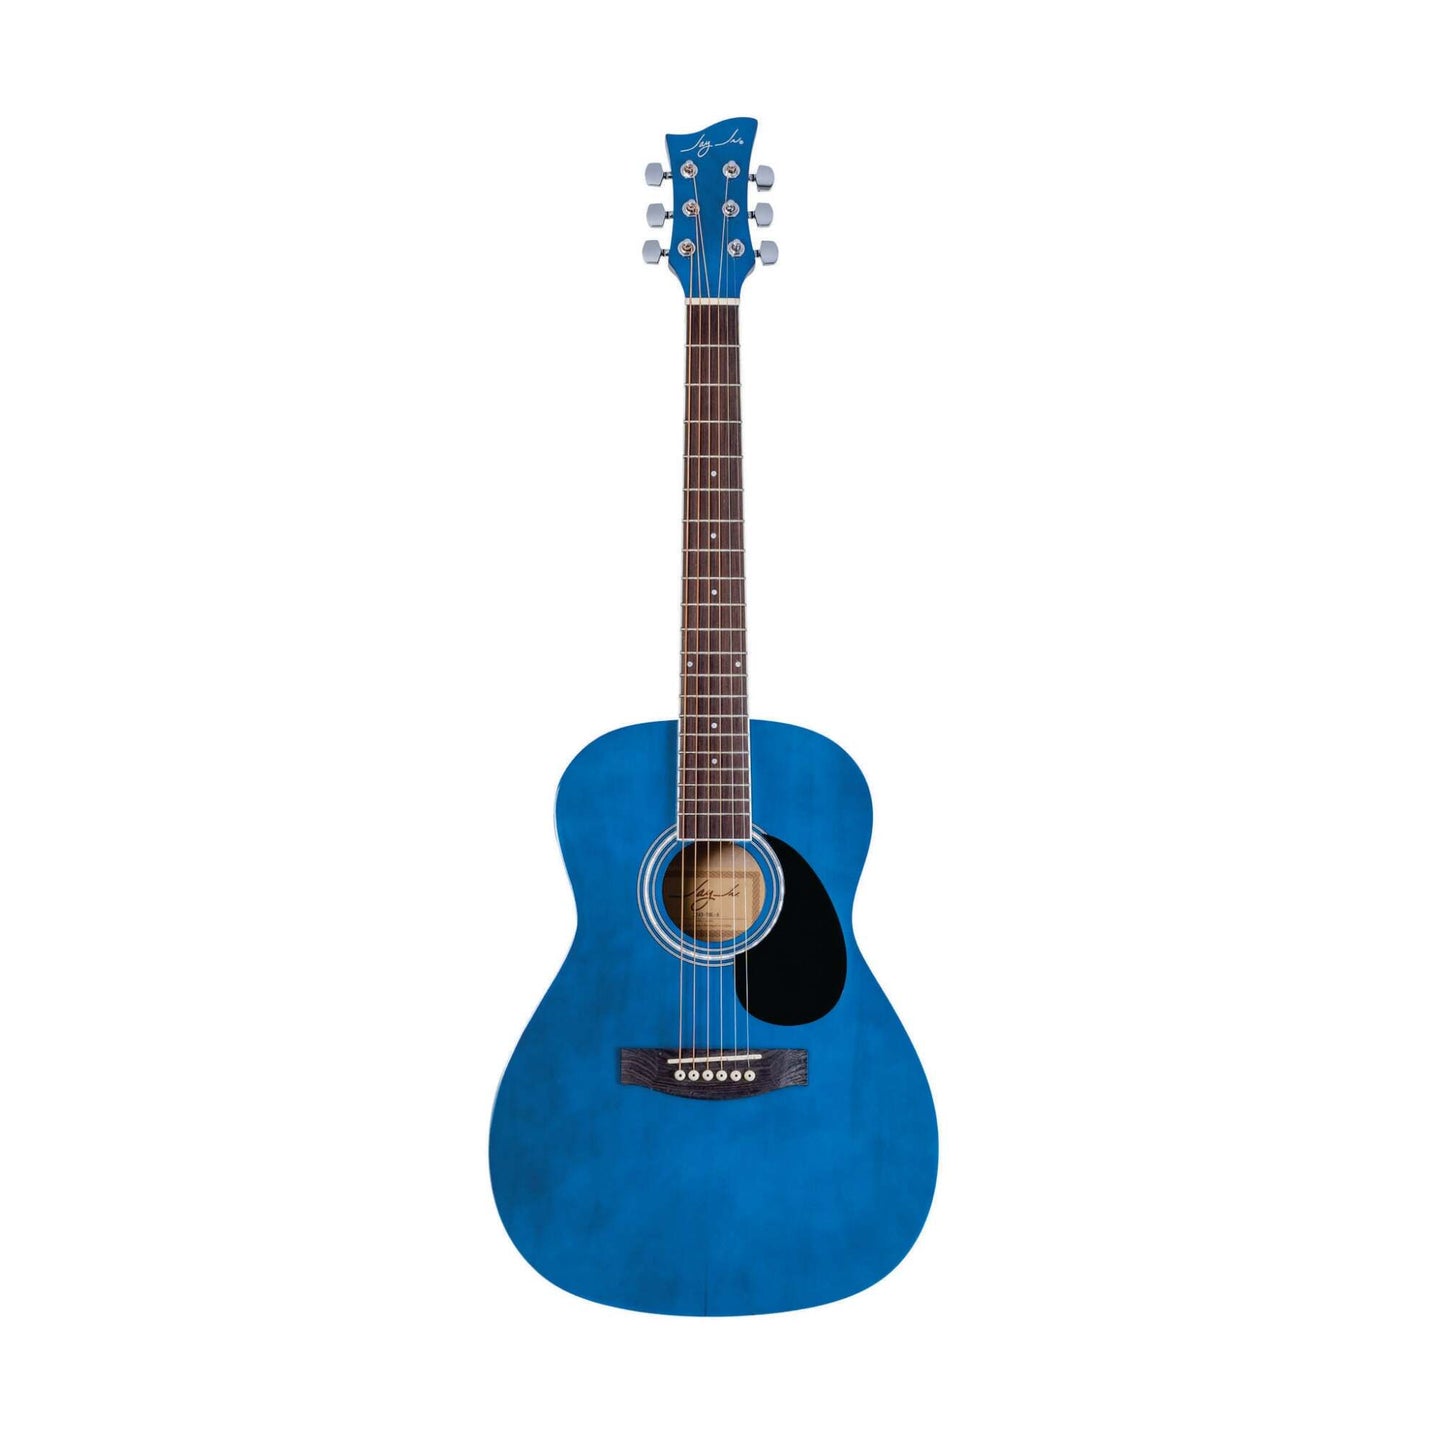 Jay Turser JJ43-TBL-A Jay Jr Series 3/4 Size Dreadnought Acoustic Guitar. Trans Blue